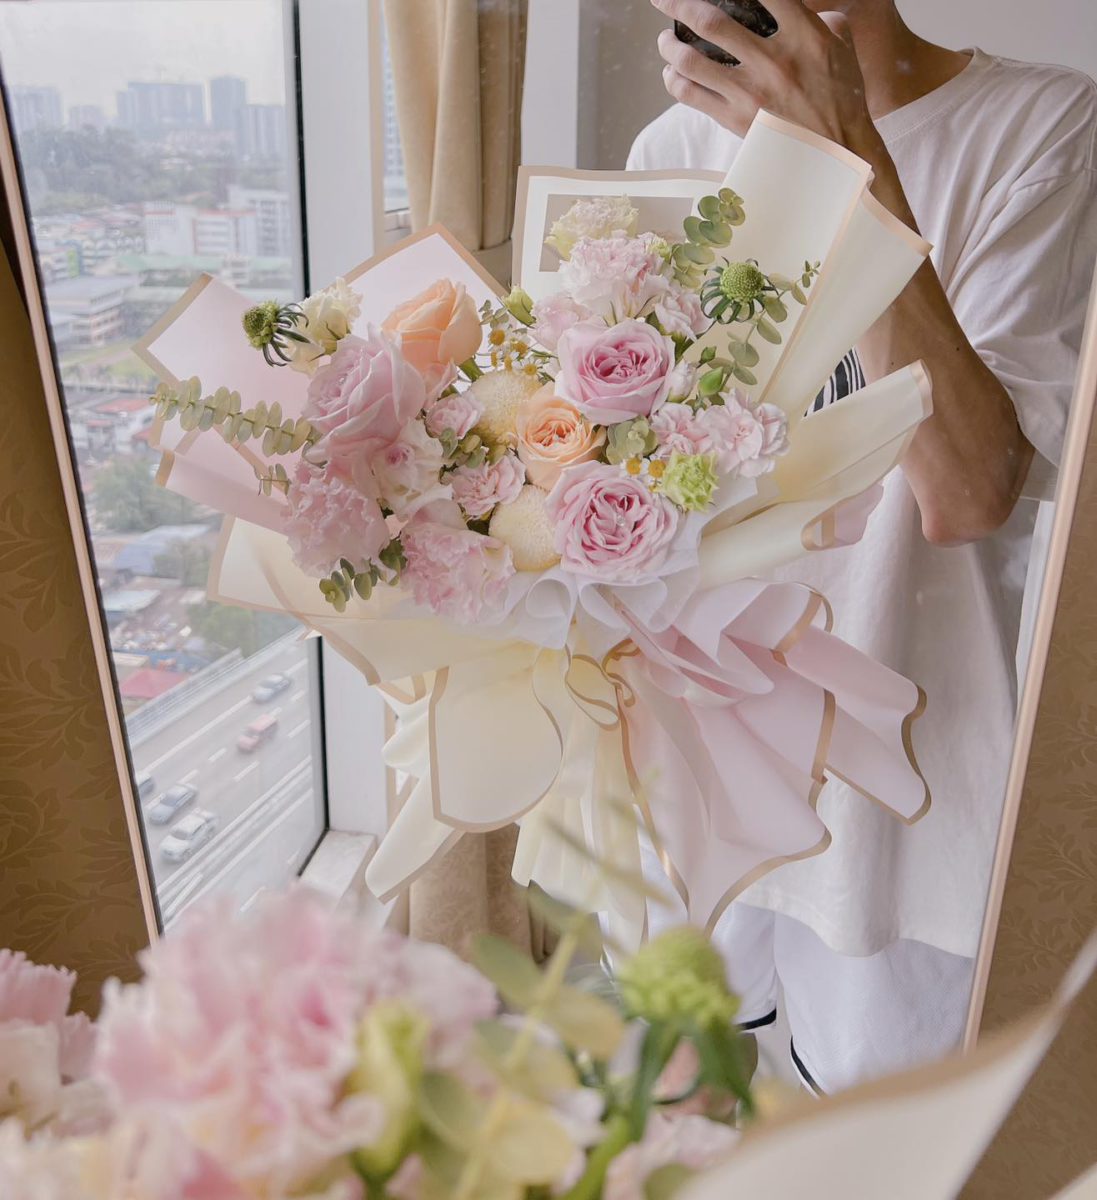 Mr. Florist Flowers & Events 花品先生